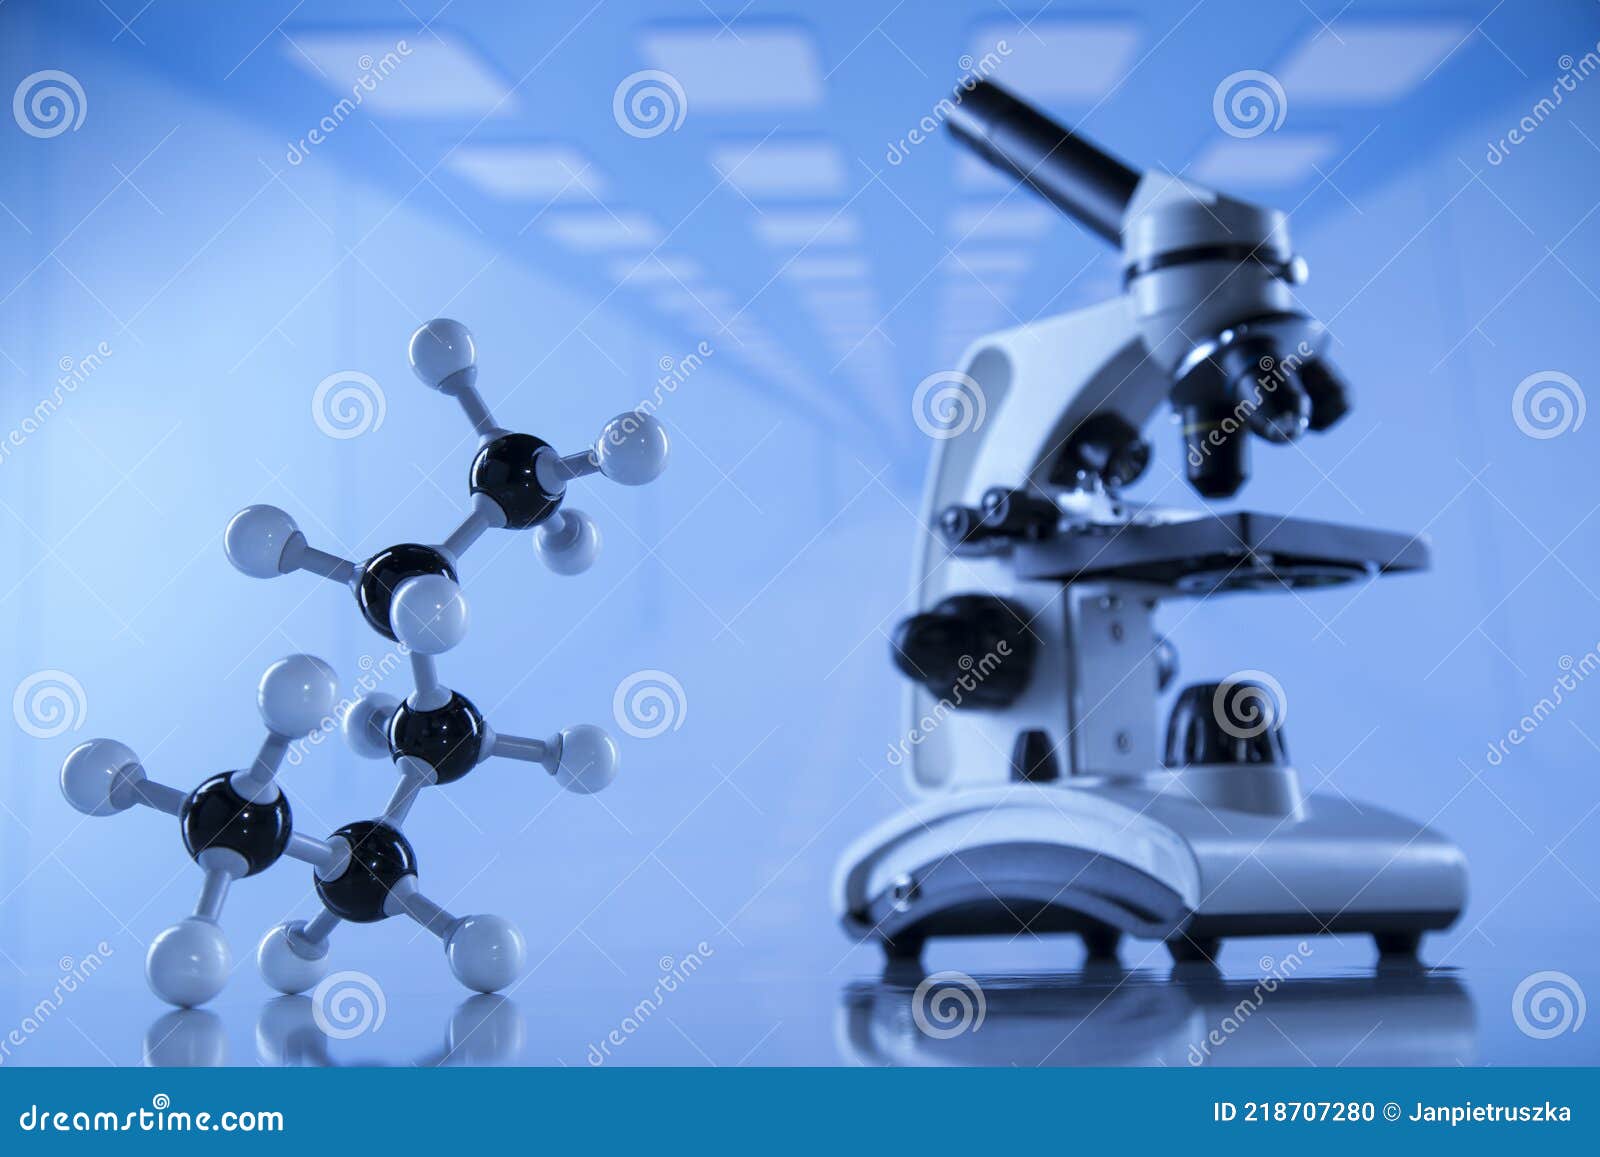 Atom, Microscope, Laboratory Background Stock Photo - Image of ...